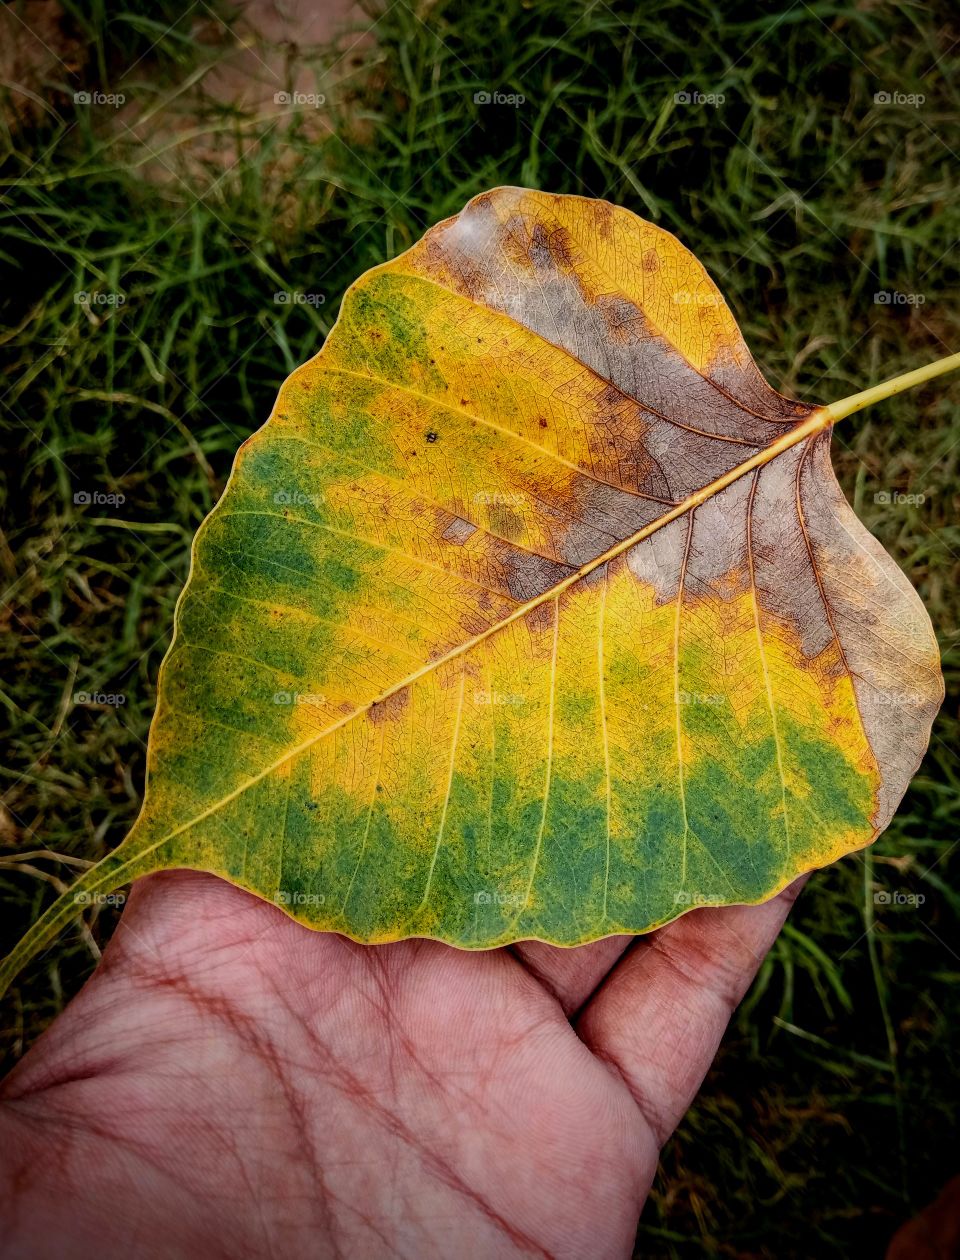 bodhi tree leaf in hand